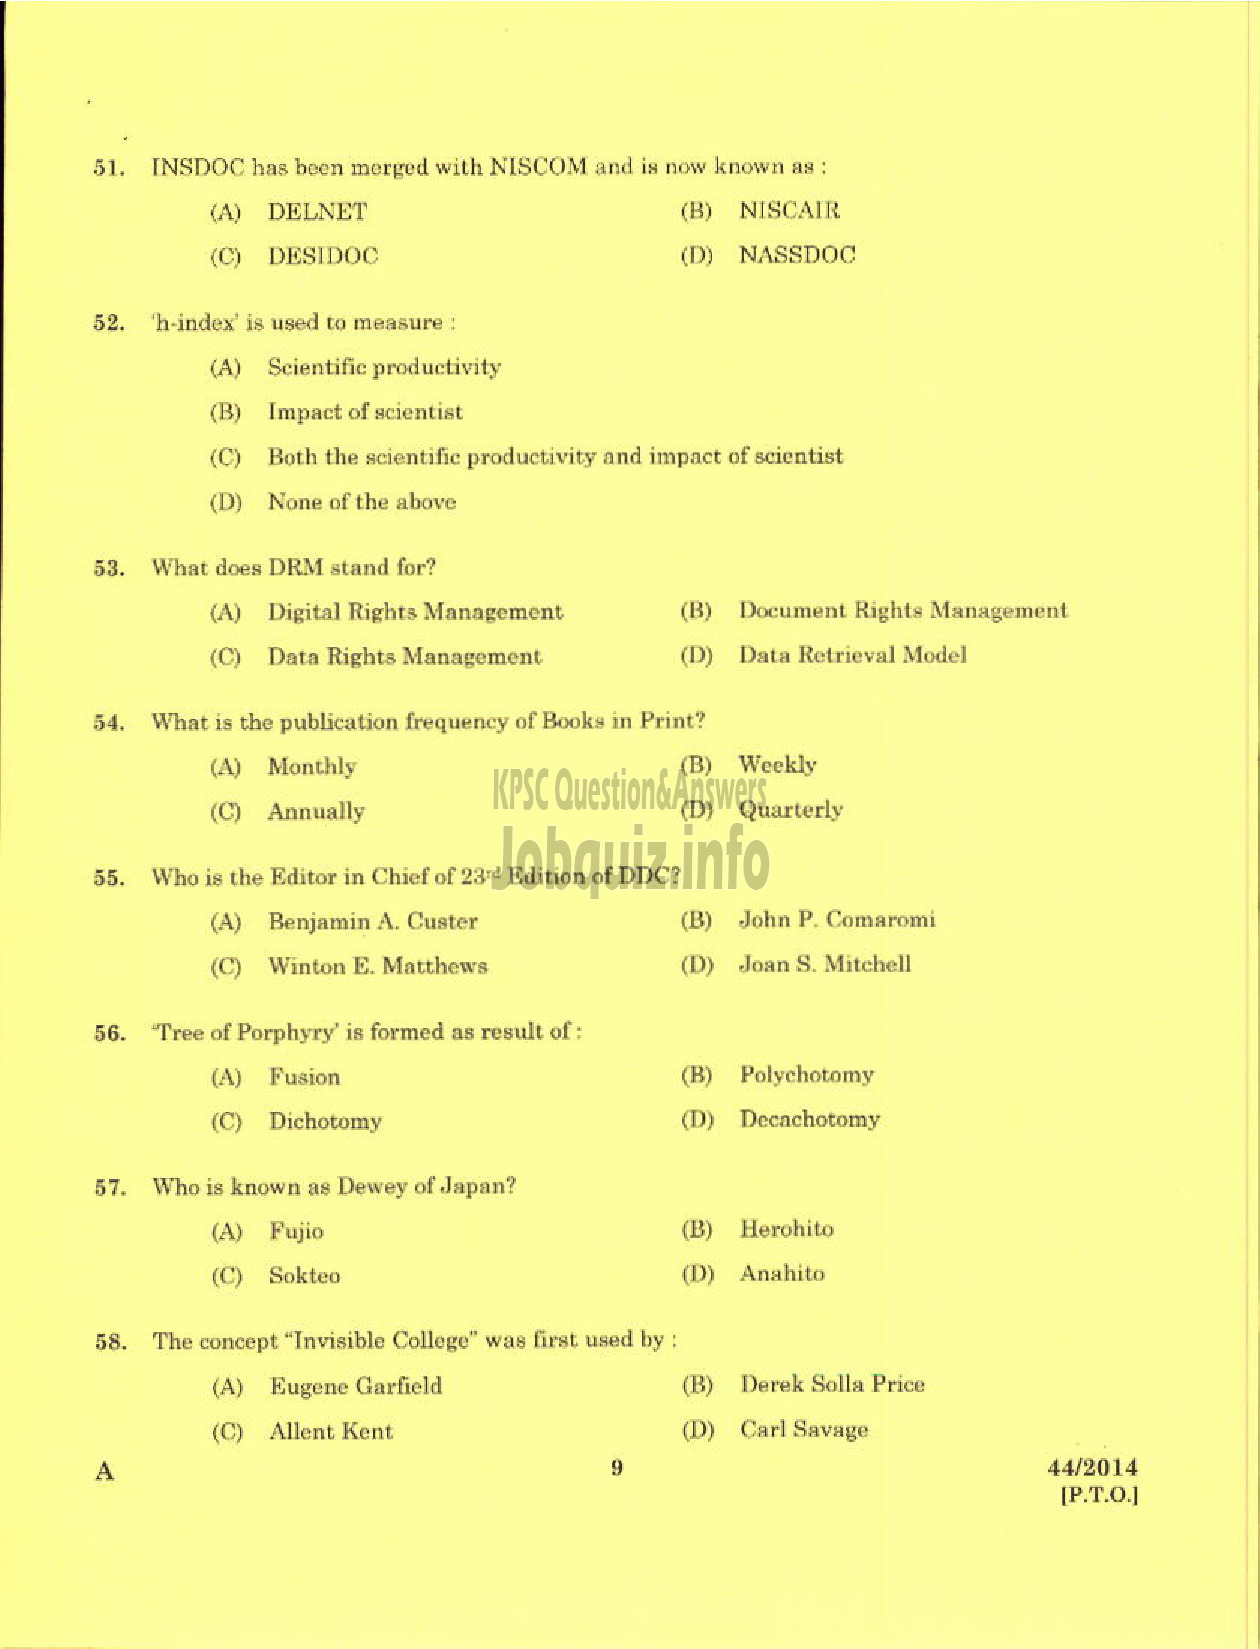 Kerala PSC Question Paper - LIBRARIAN GR II ALAPPUZHA KERALA MUNICIPAL COMMON SERVICE-7